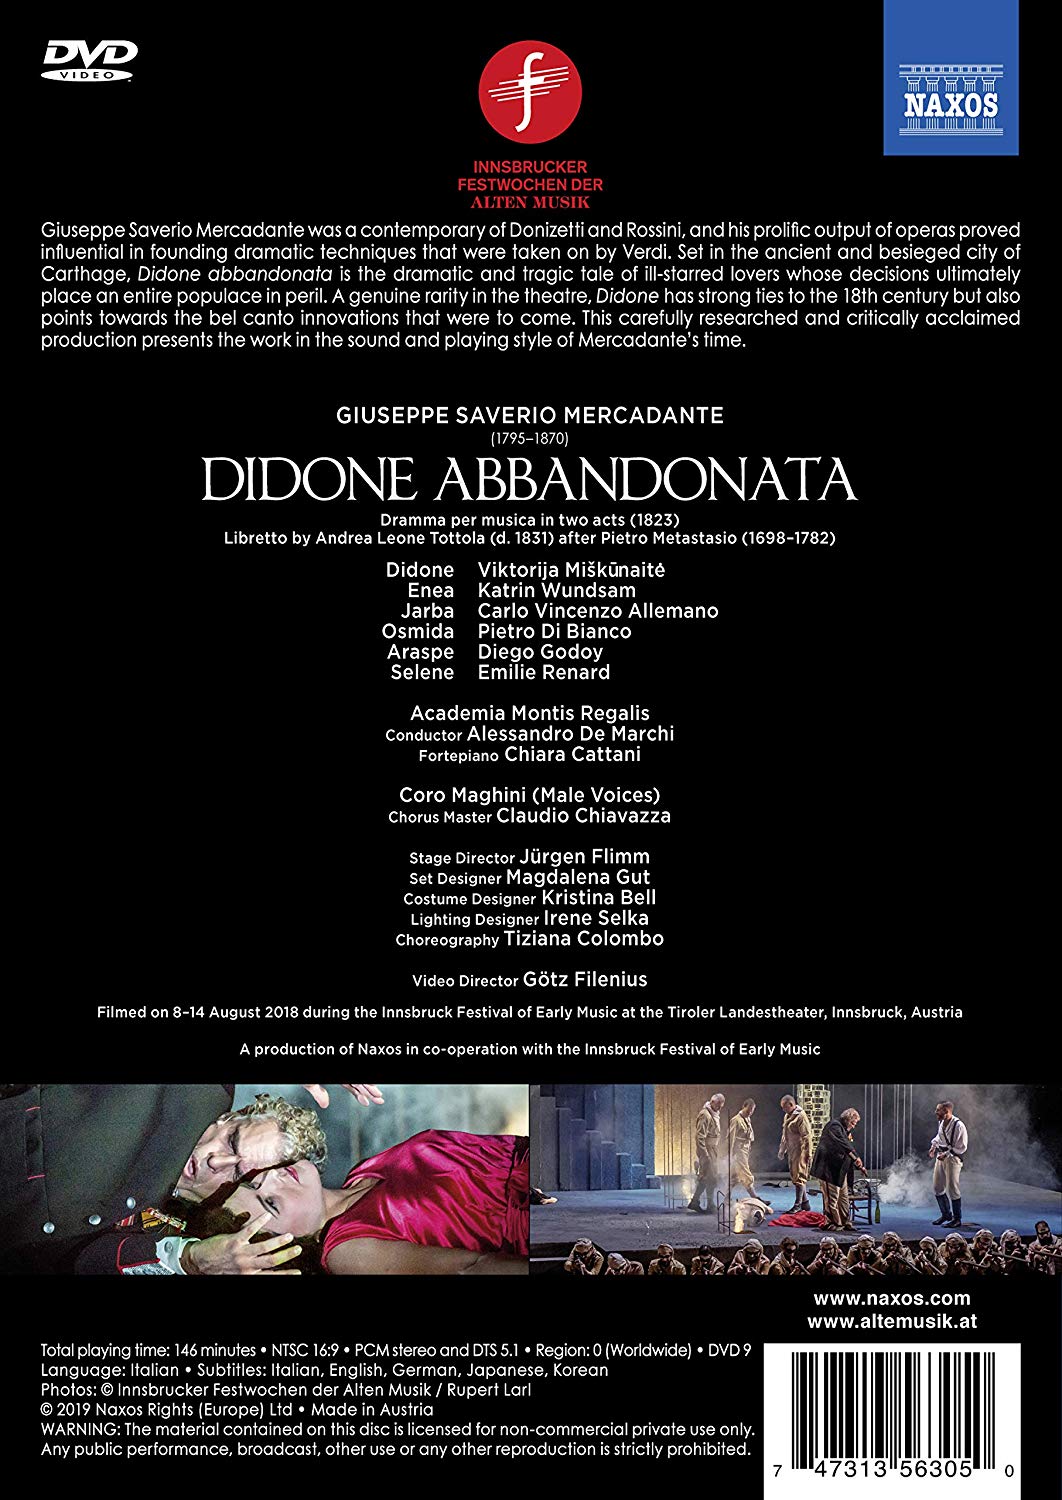 Alessandro De Marchi 사베리오 메르카단테: 오페라 '버림받은 디도네' (Saverio Mercadante: Didone abbandonata)